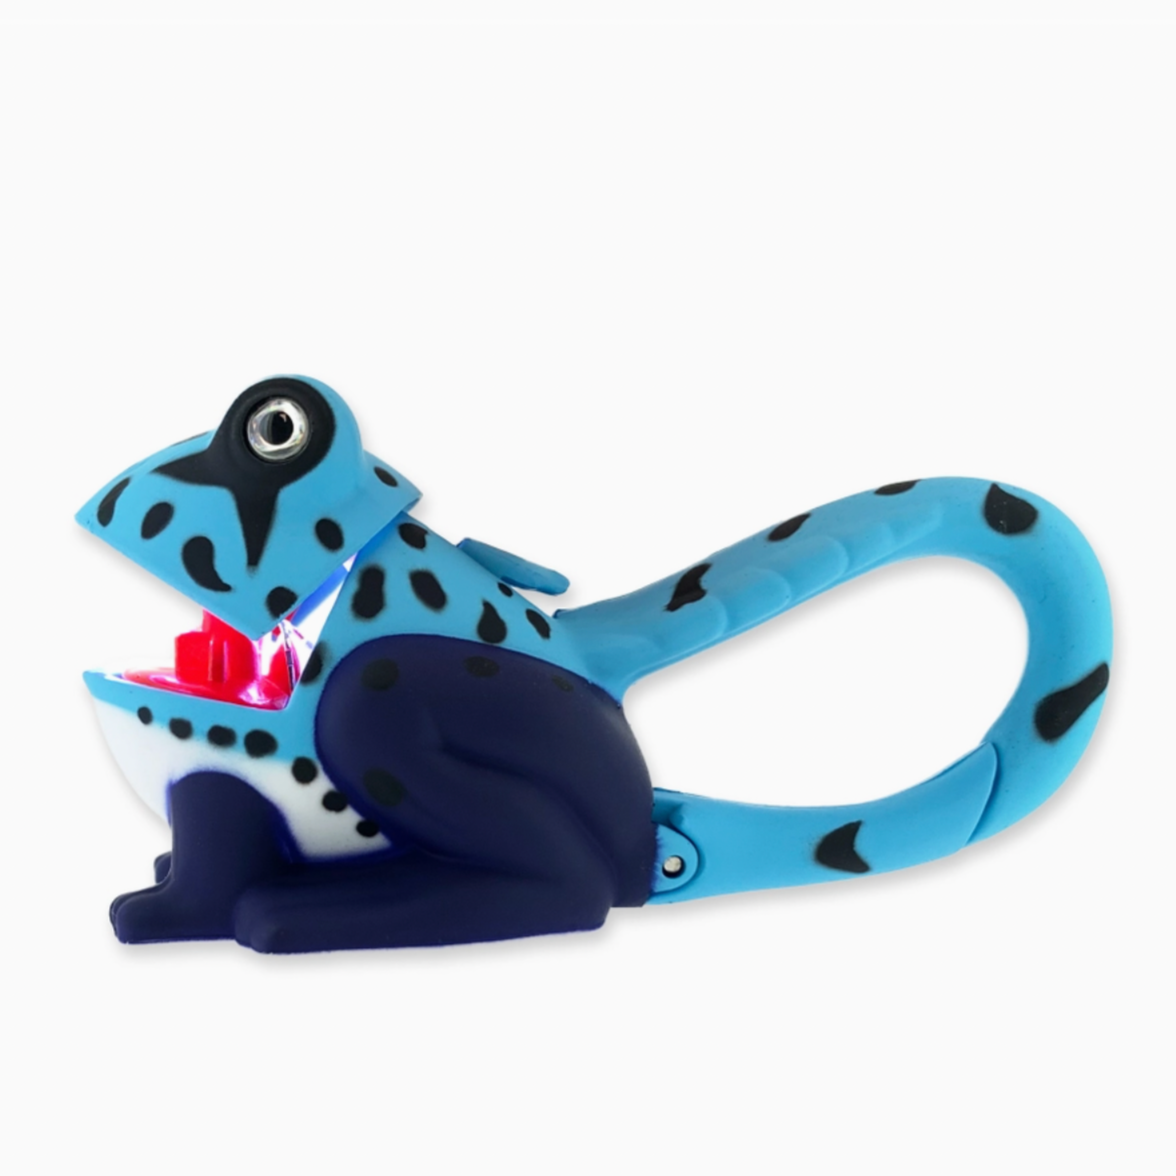 Lifelight Animal Carabiner Flashlight - Blue Frog